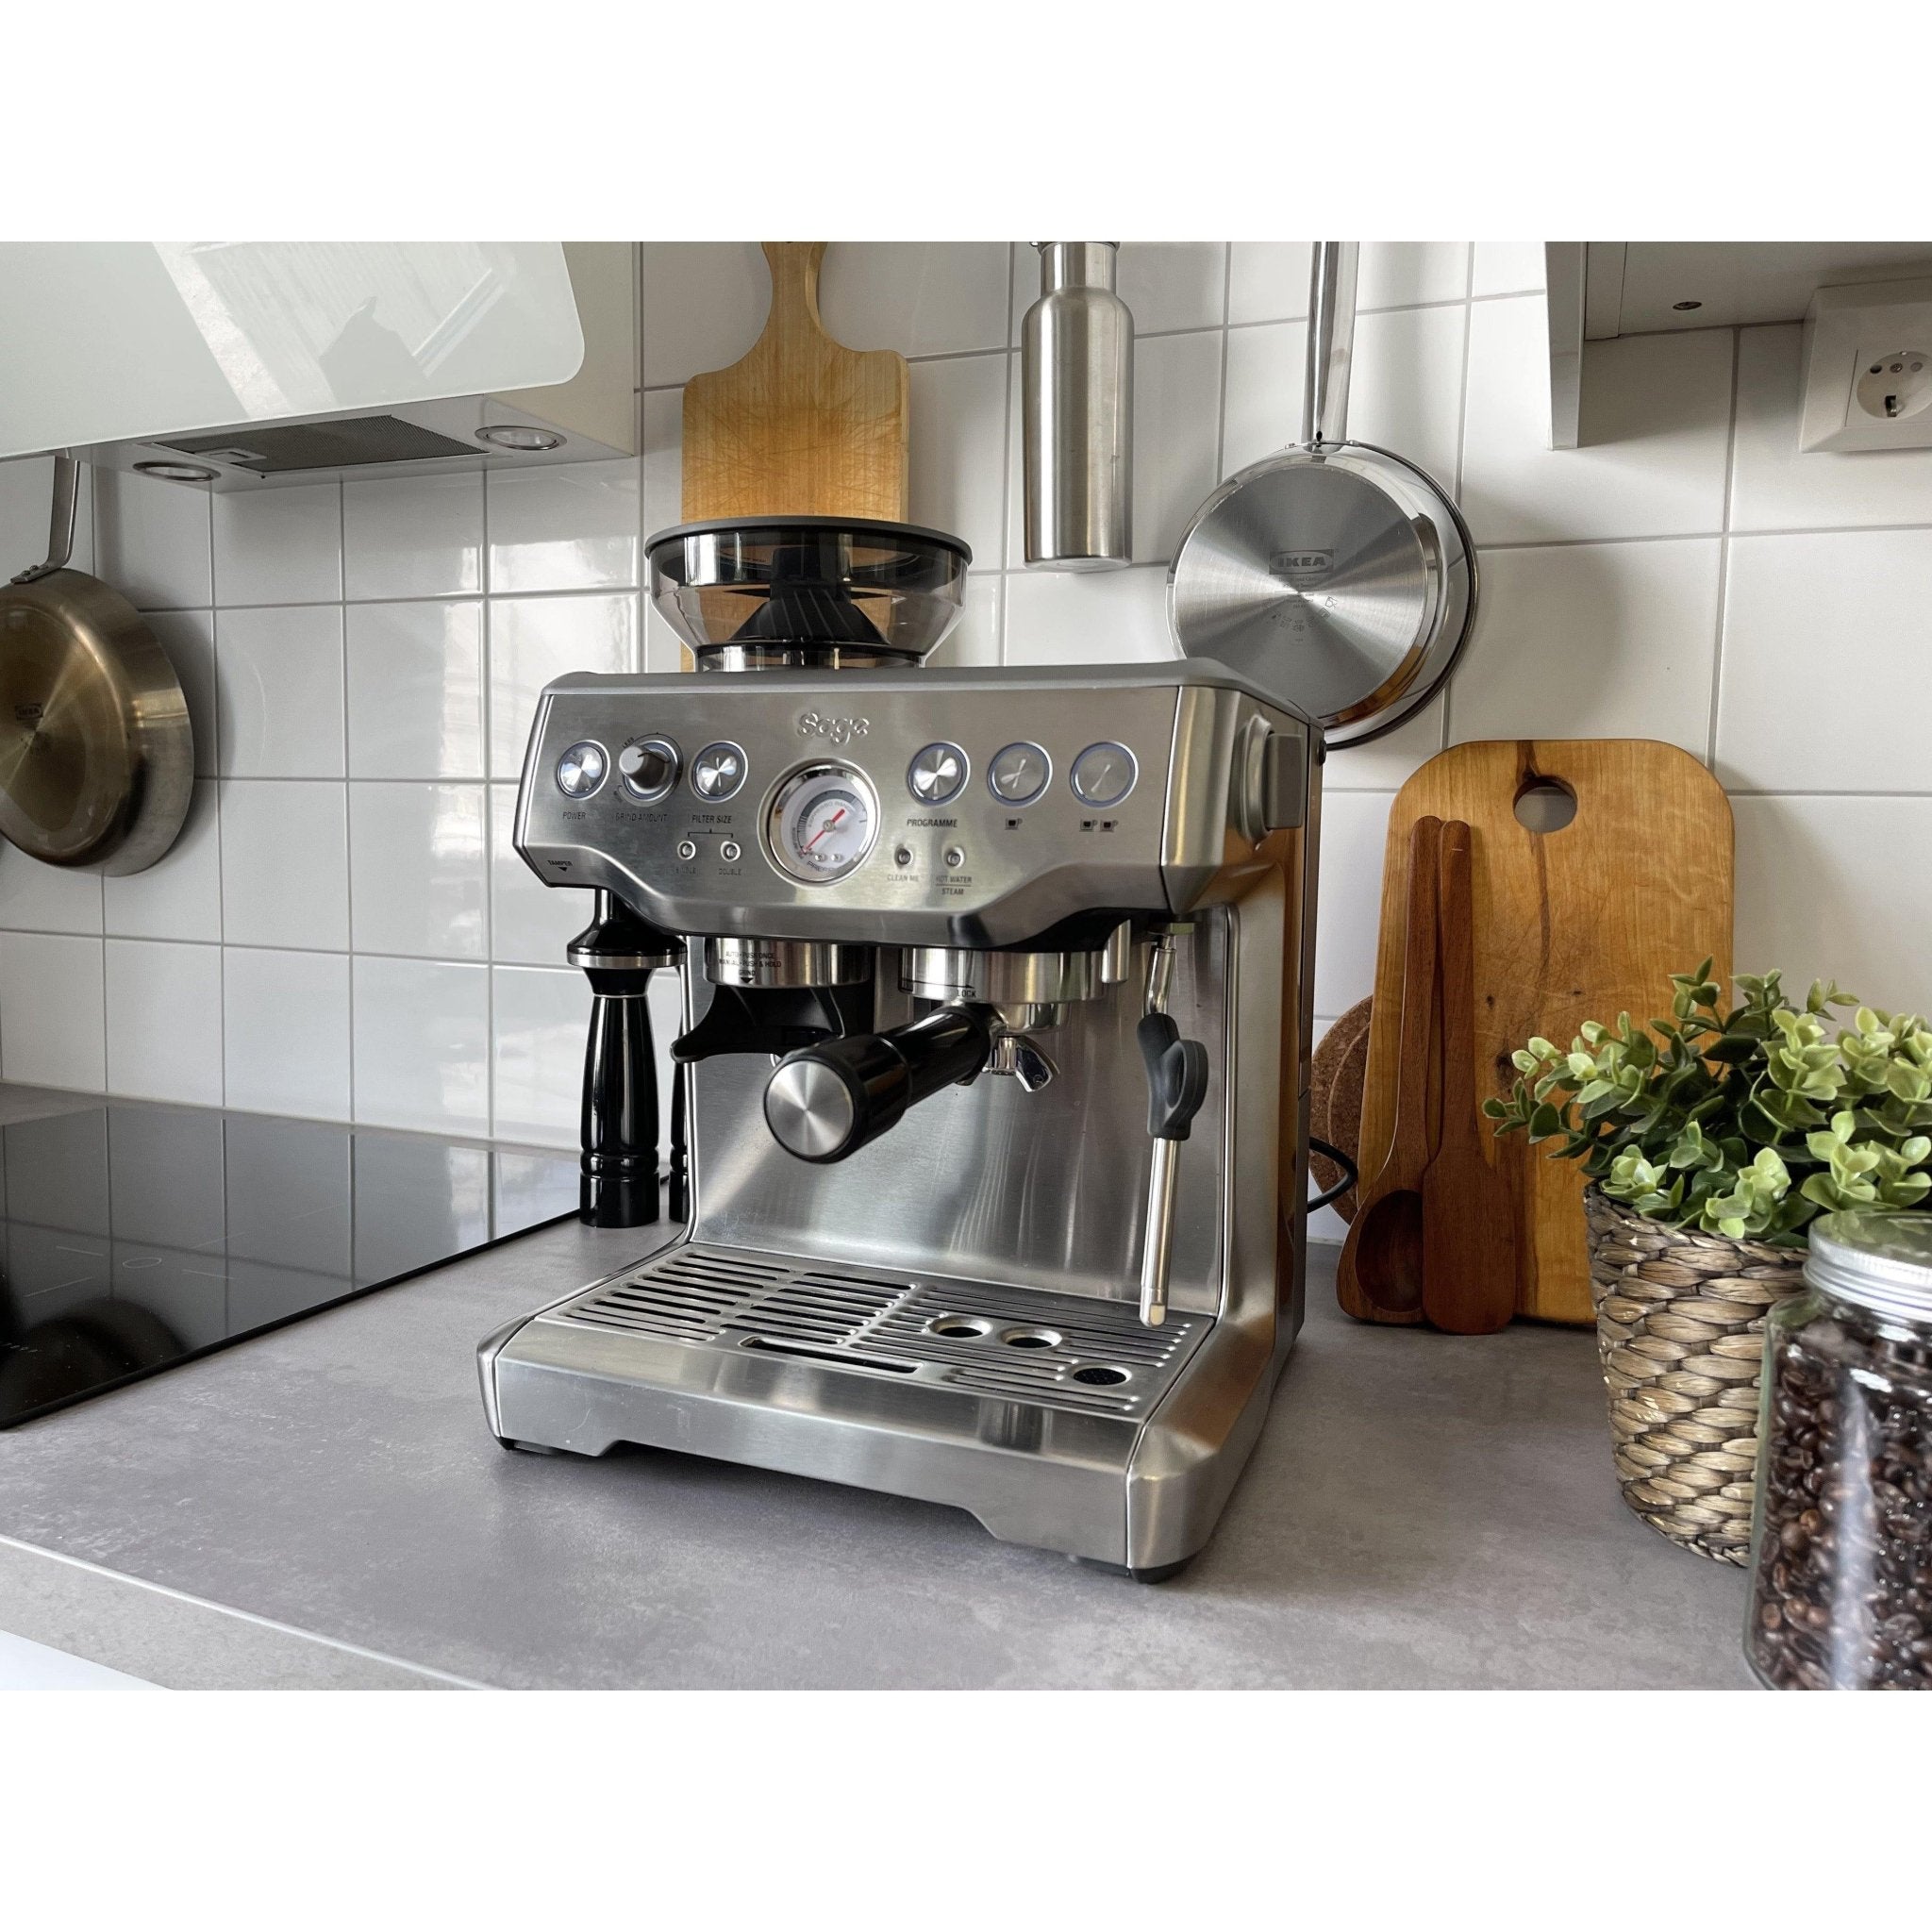 Sage Barista Express - La máquina de café espresso definitiva para